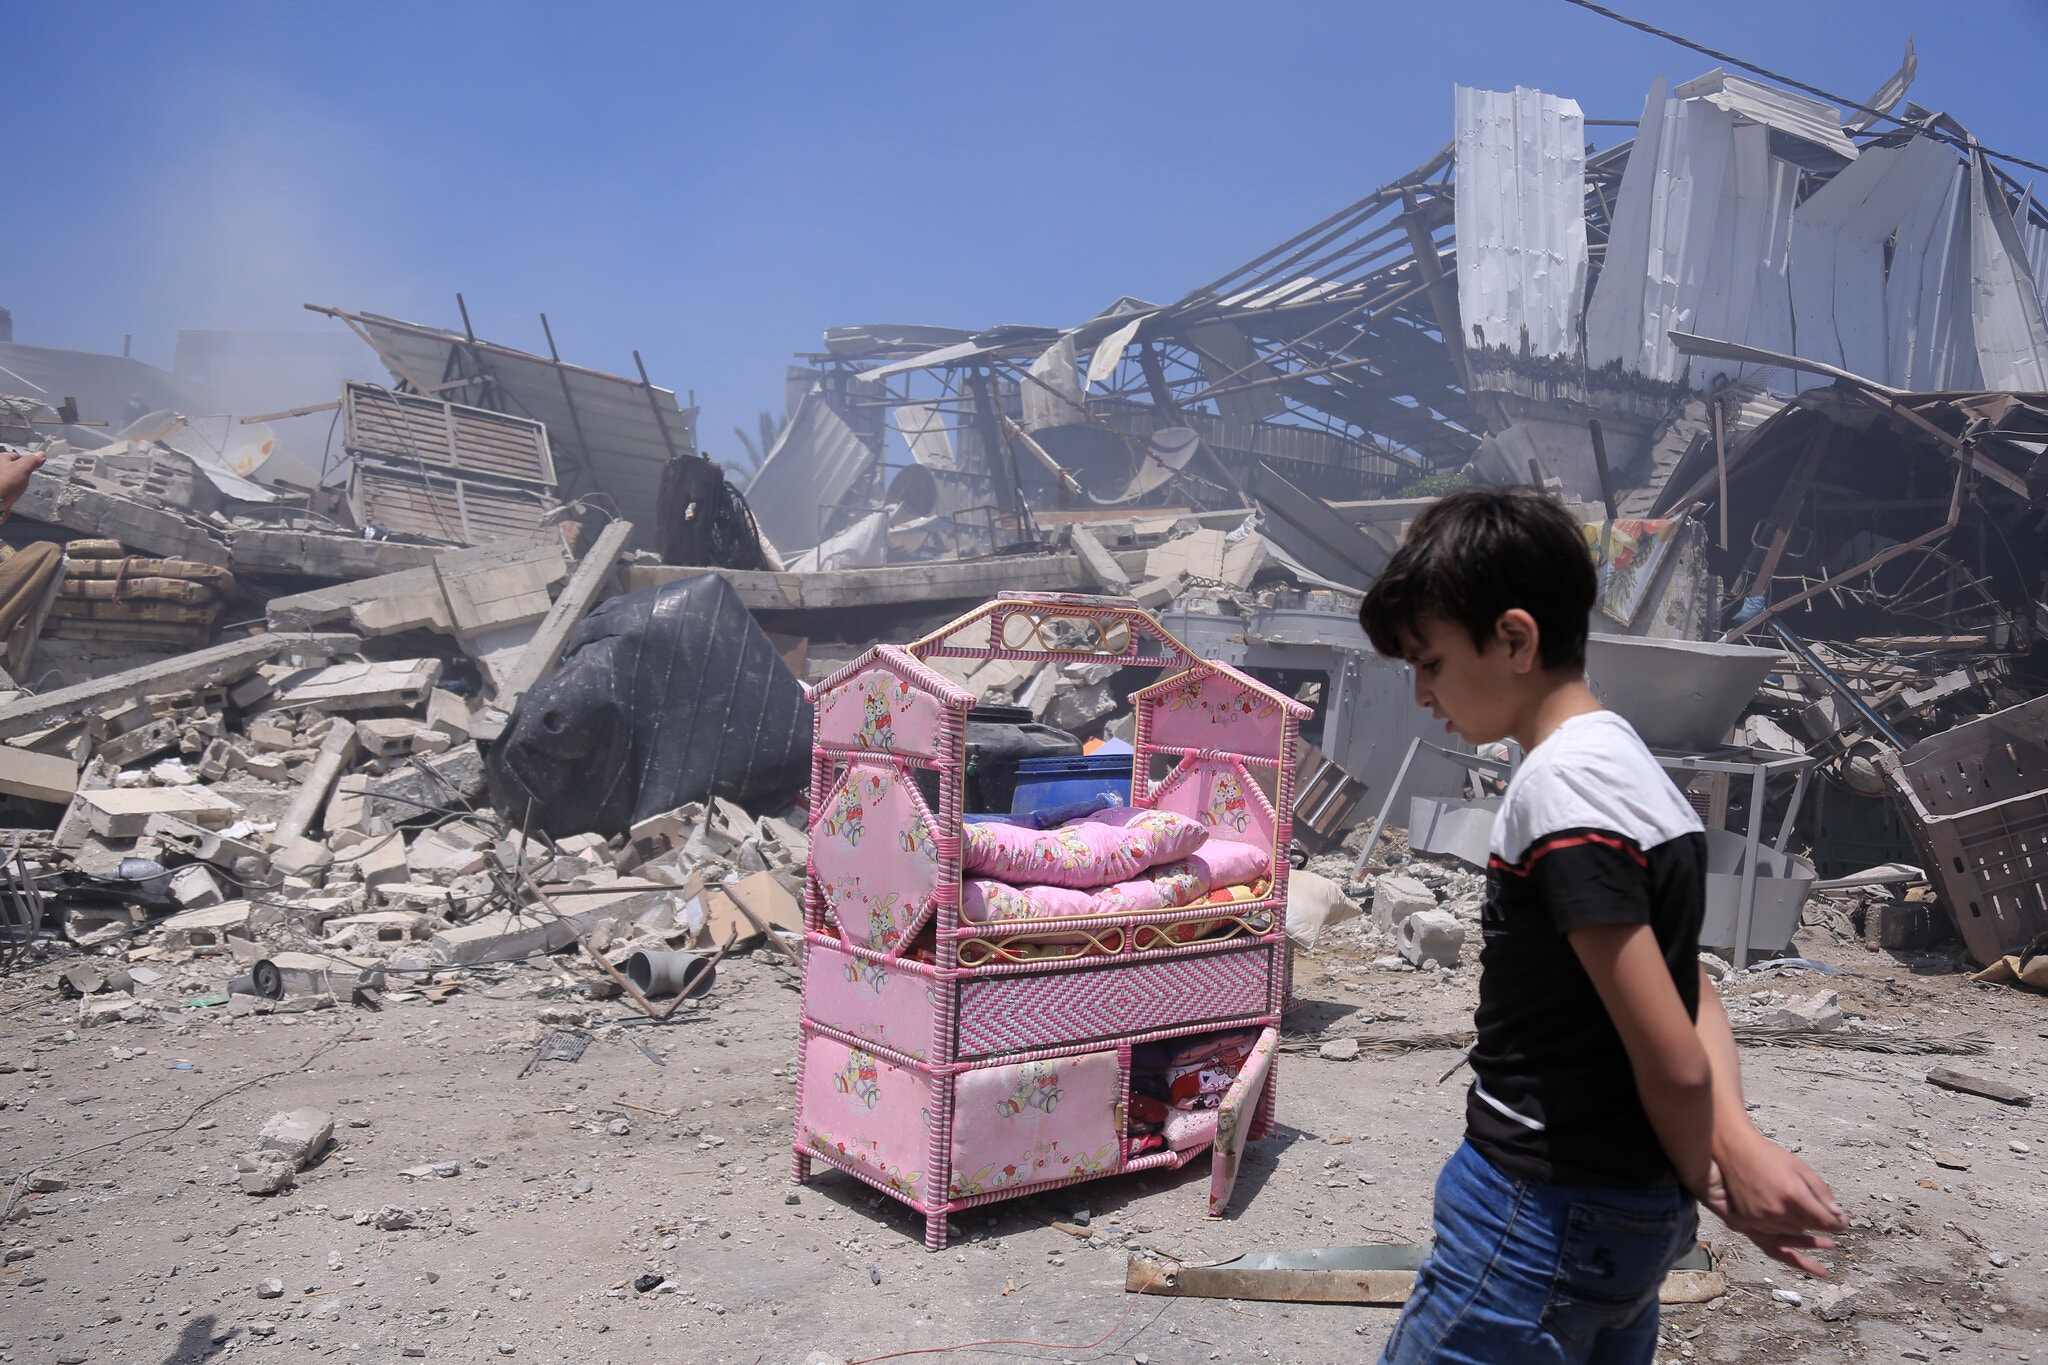 Radio garbage on Gaza « The Standard